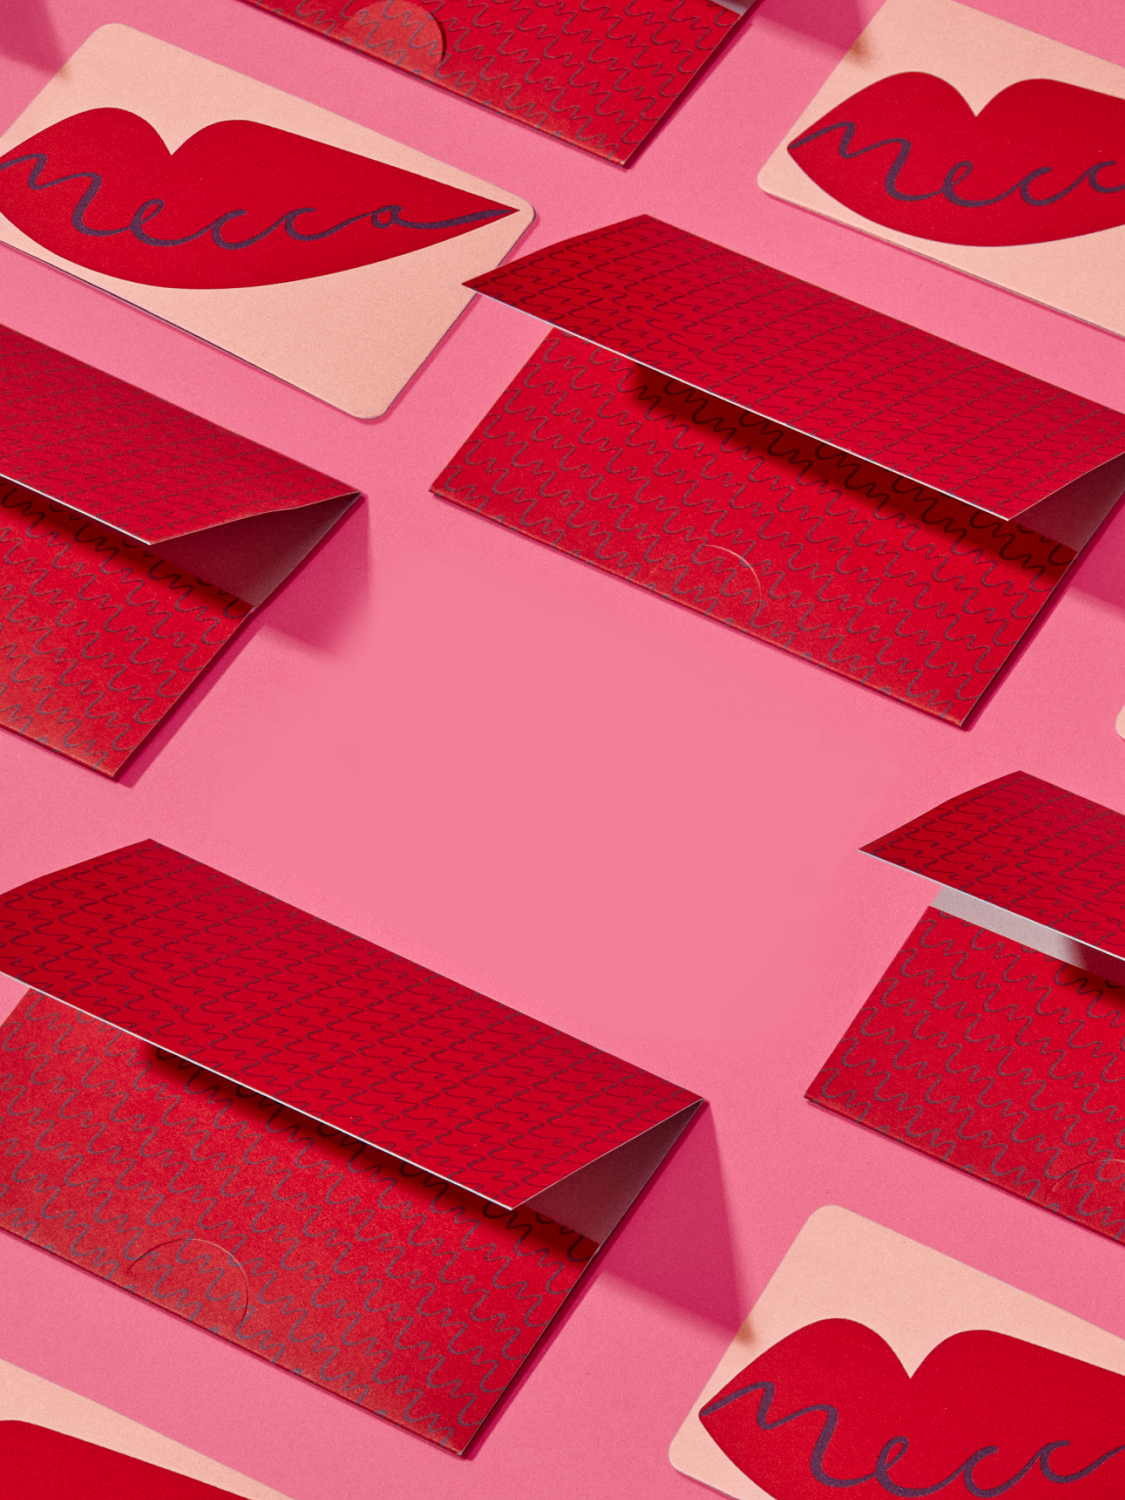 H&M Gift-Card Cardboard Display Details – Fixtures Close Up